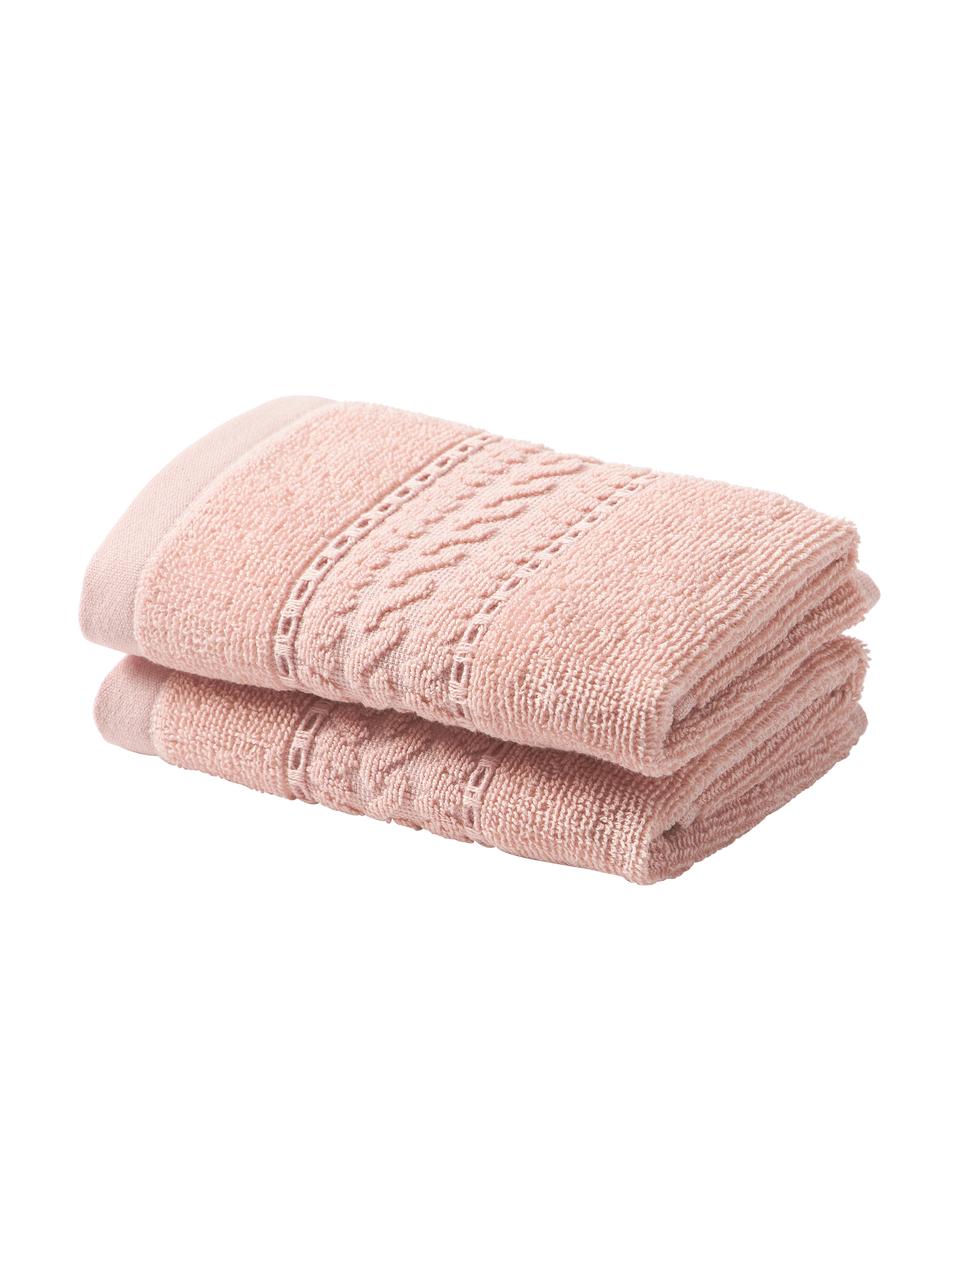 Asciugamano Cordelia, Rosa, Asciugamano per ospiti, Larg. 30 x Lung. 50 cm, 2 pz